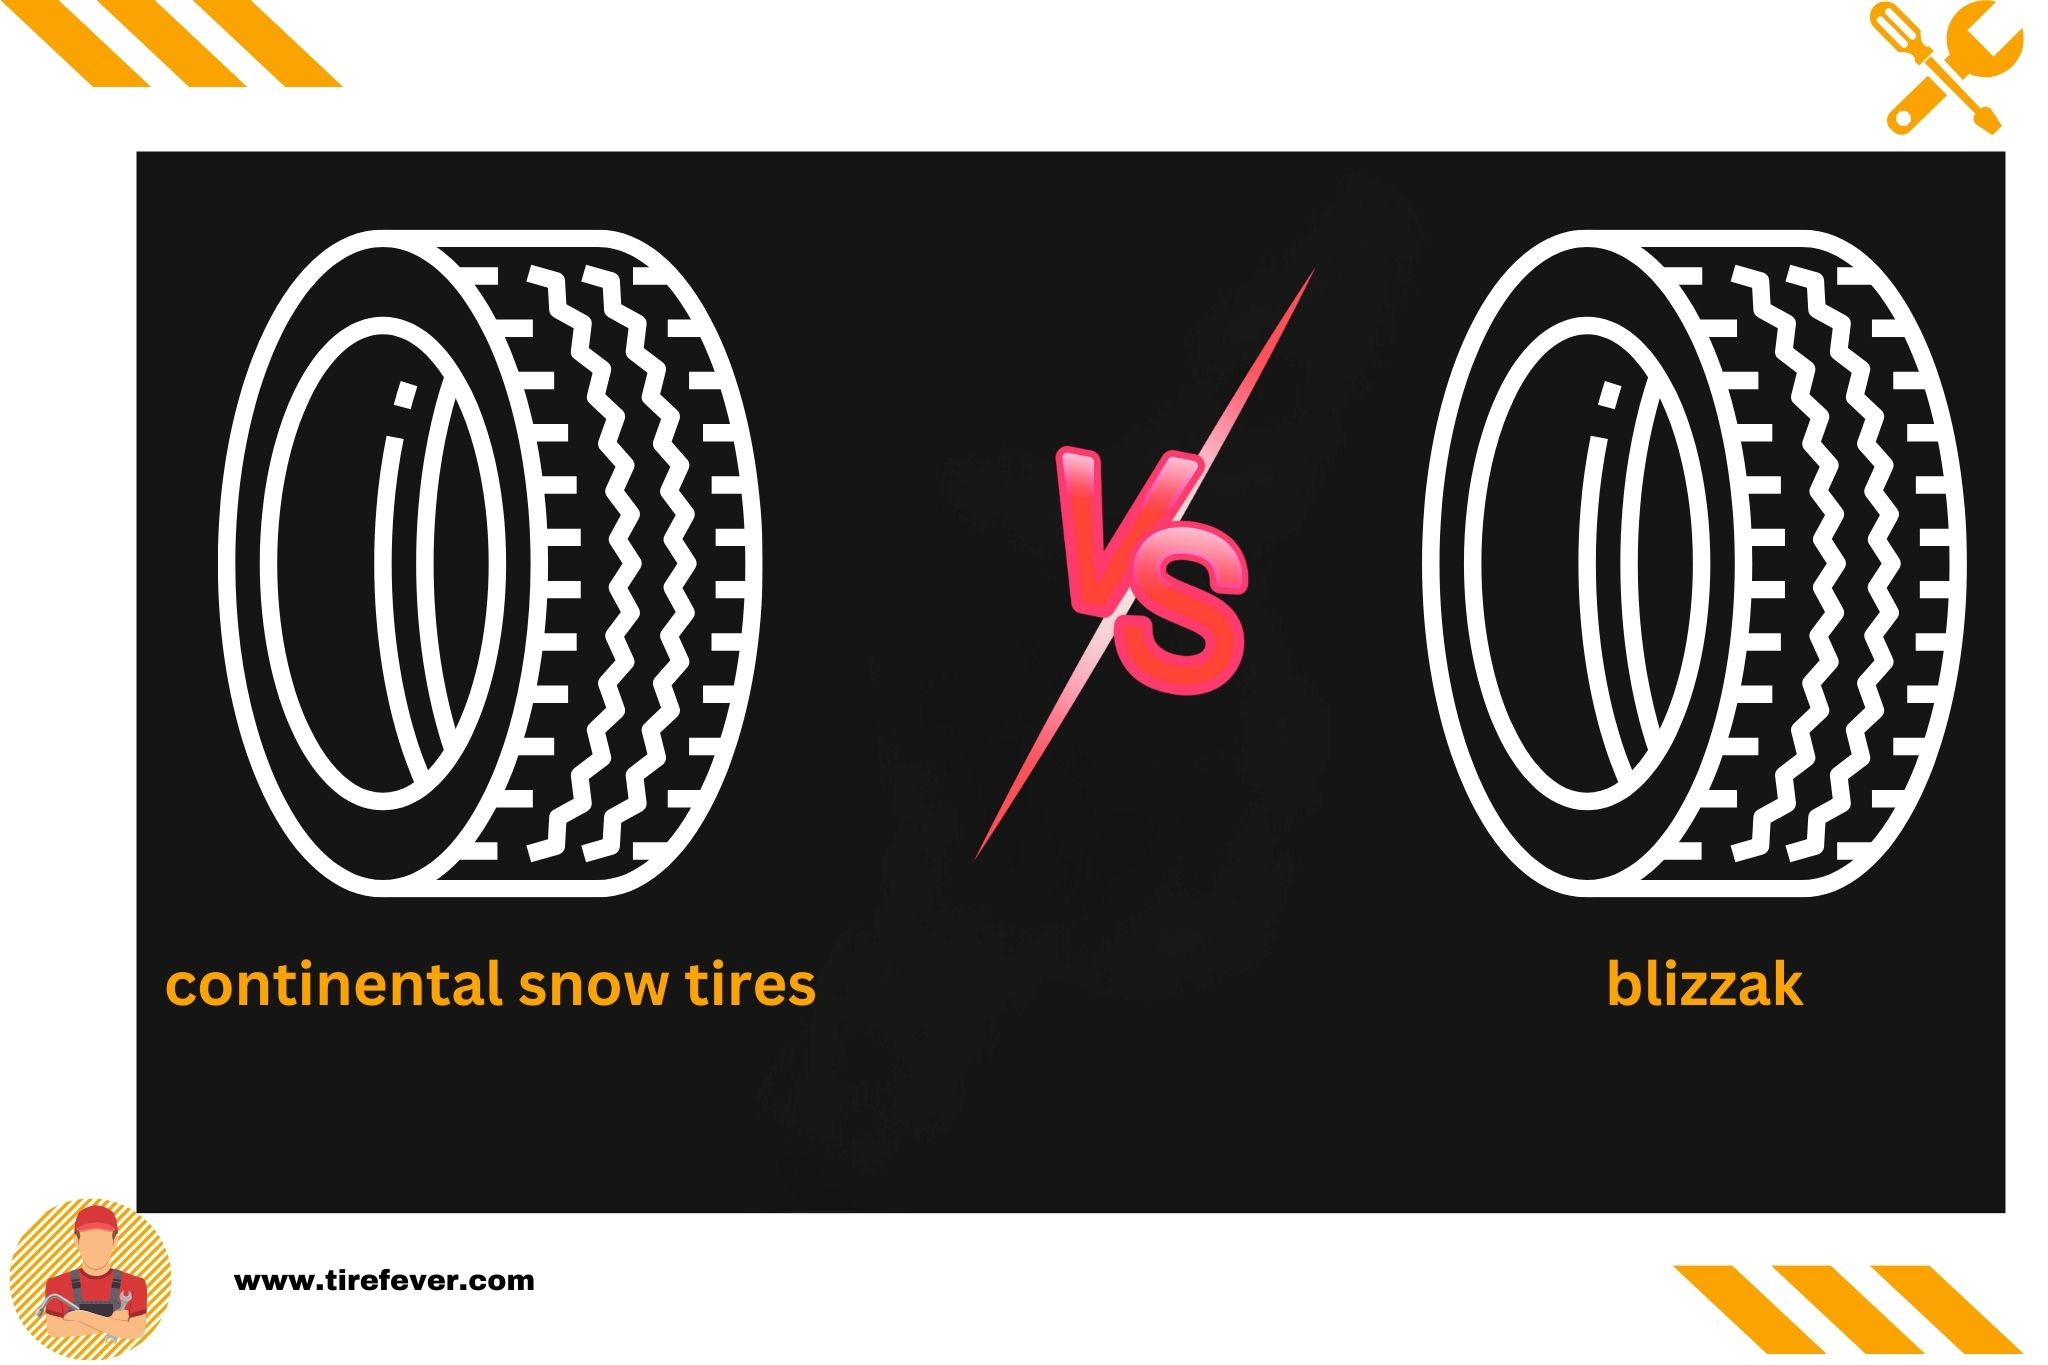 continental snow tires vs blizzak